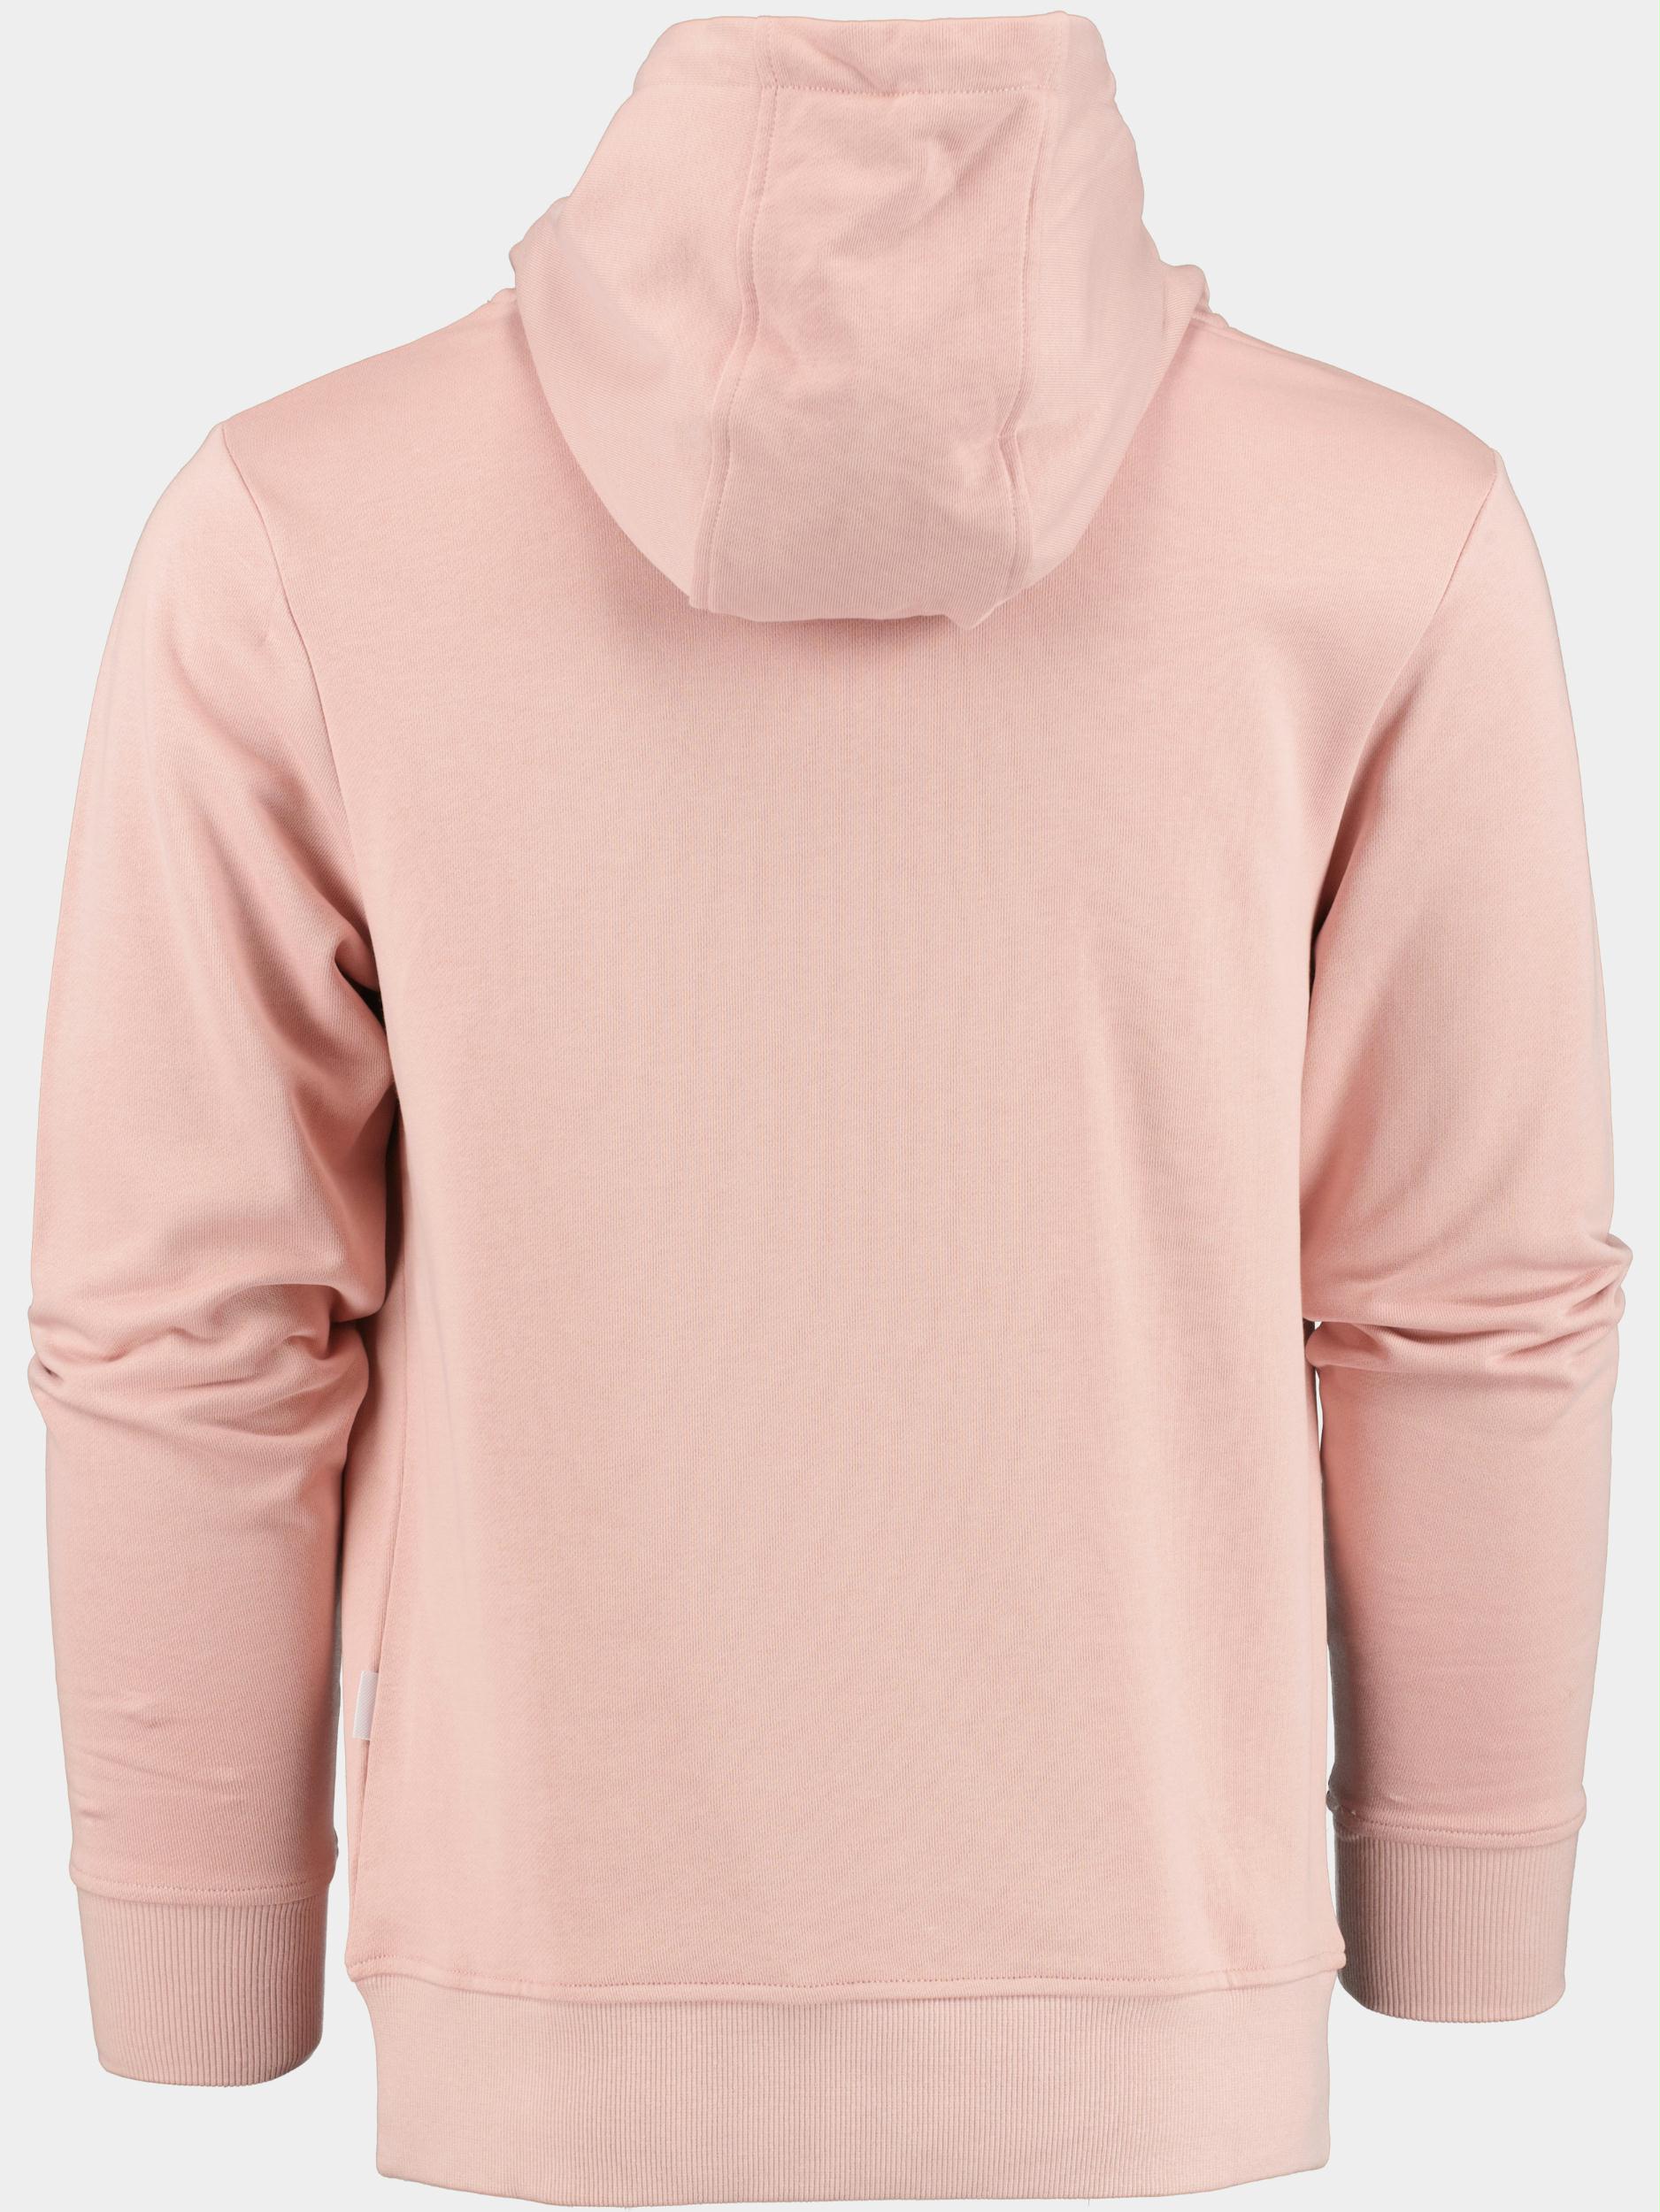 Supply & Co. Sweater Roze Nijel Hoodie With Chestembro 23112NI05/737 blush